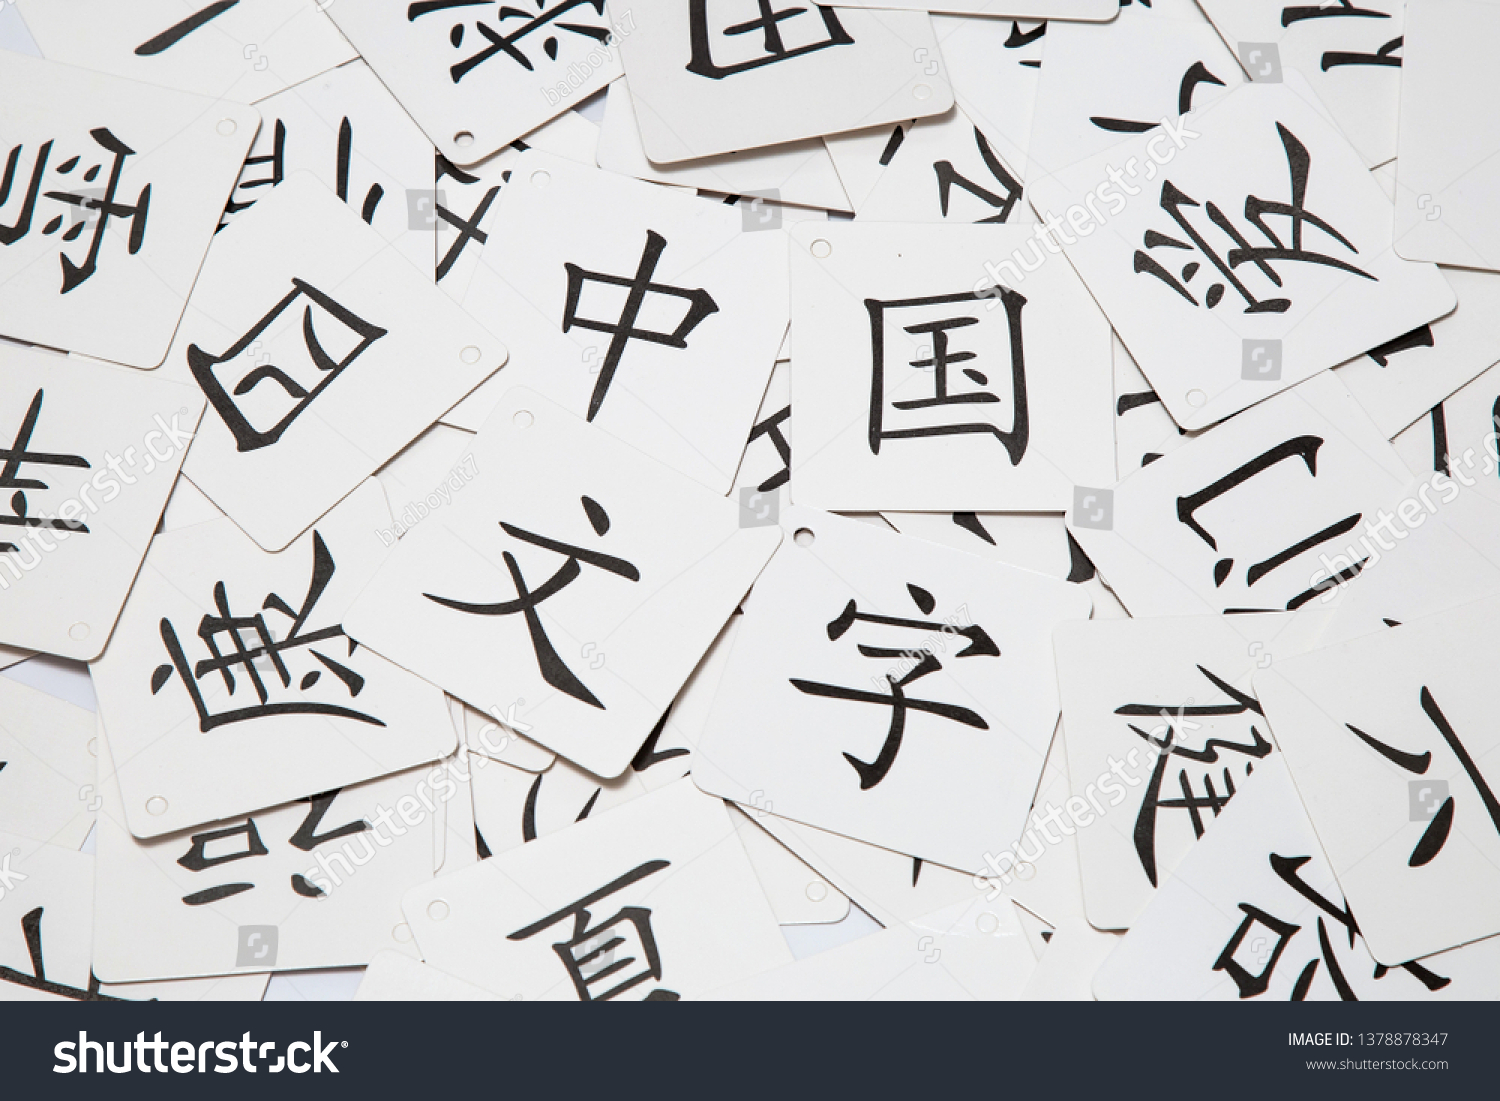 A card for learning Chinese characters（On the CARDS are some common Chinese characters:Guo, han, xue, si, kang, xia, love, ye, jian, zhi, jiu, zi, zhong） #1378878347